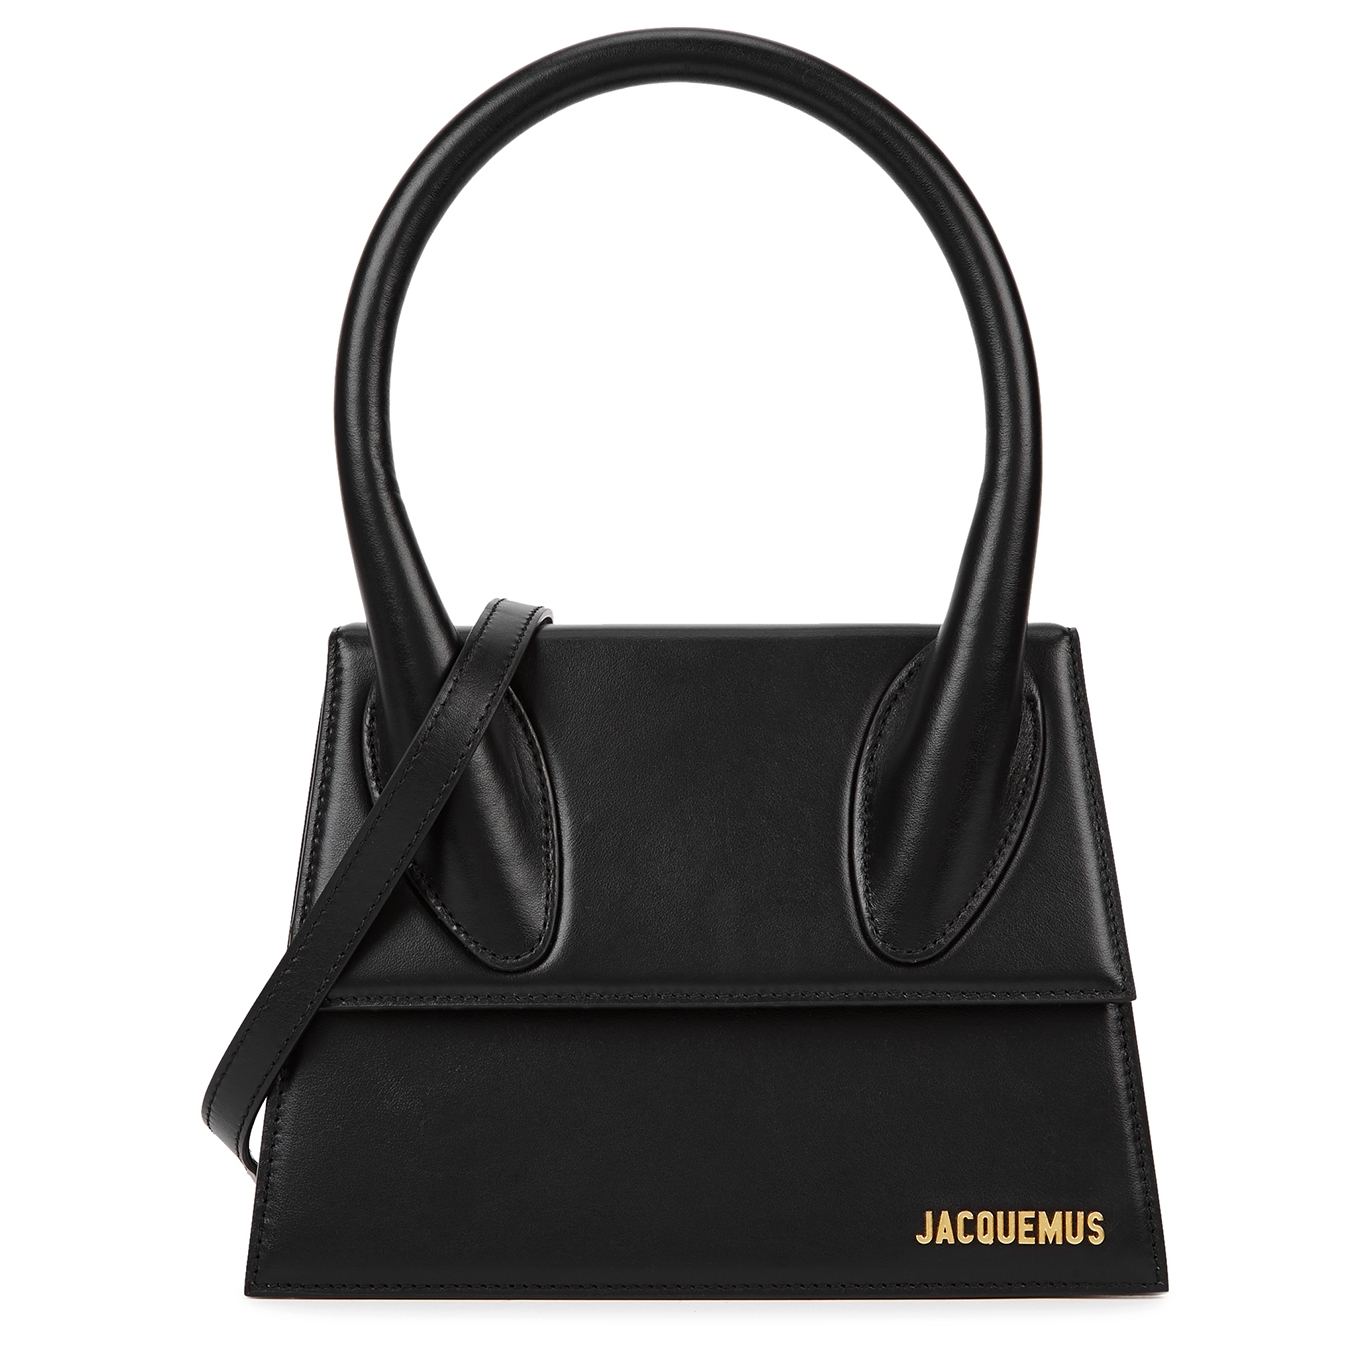 Jacquemus Le Grand Chiquito Black Leather Top Handle Bag